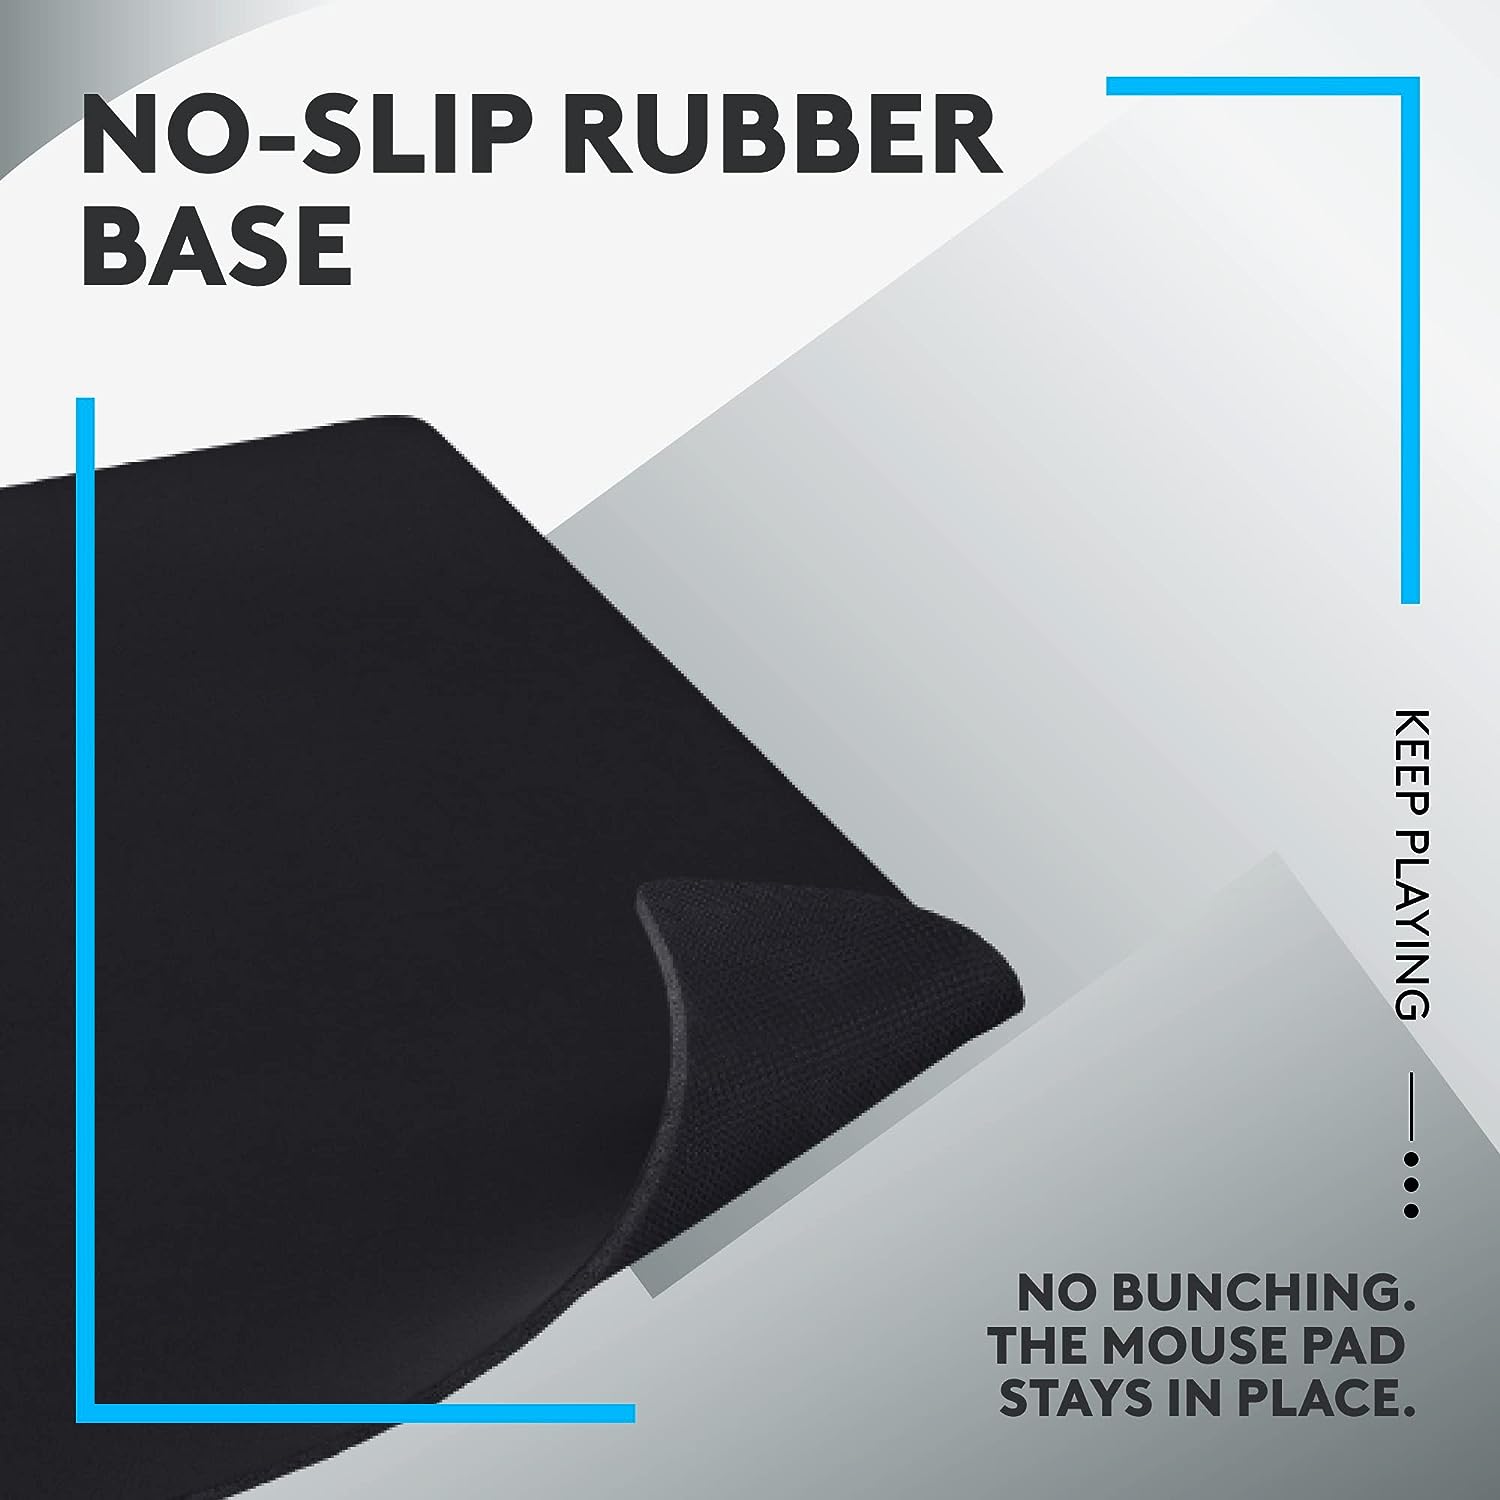 Logitech G840 XL Gaming Mouse Pad (Noir)